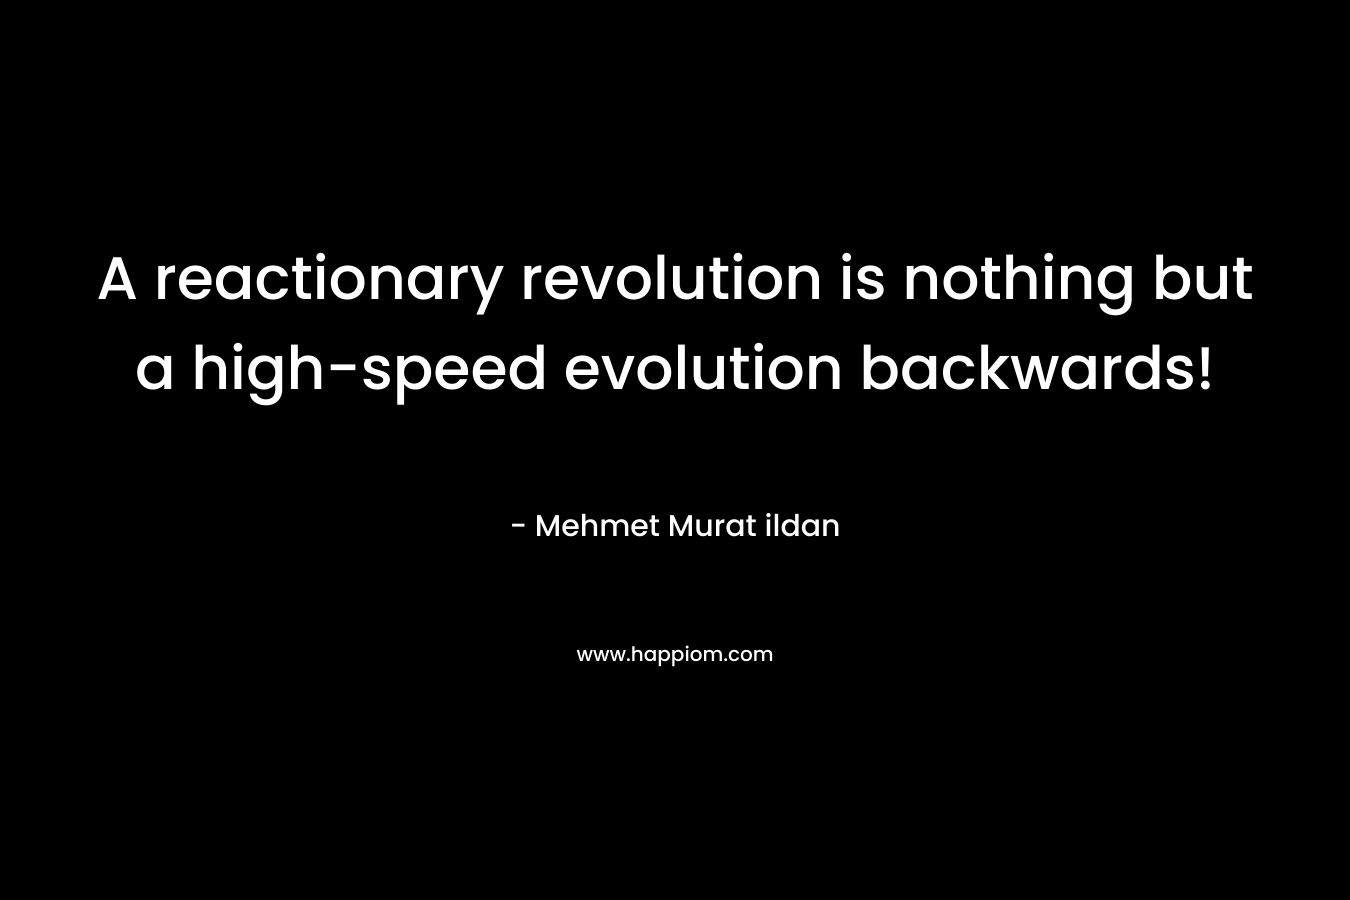 A reactionary revolution is nothing but a high-speed evolution backwards! – Mehmet Murat ildan